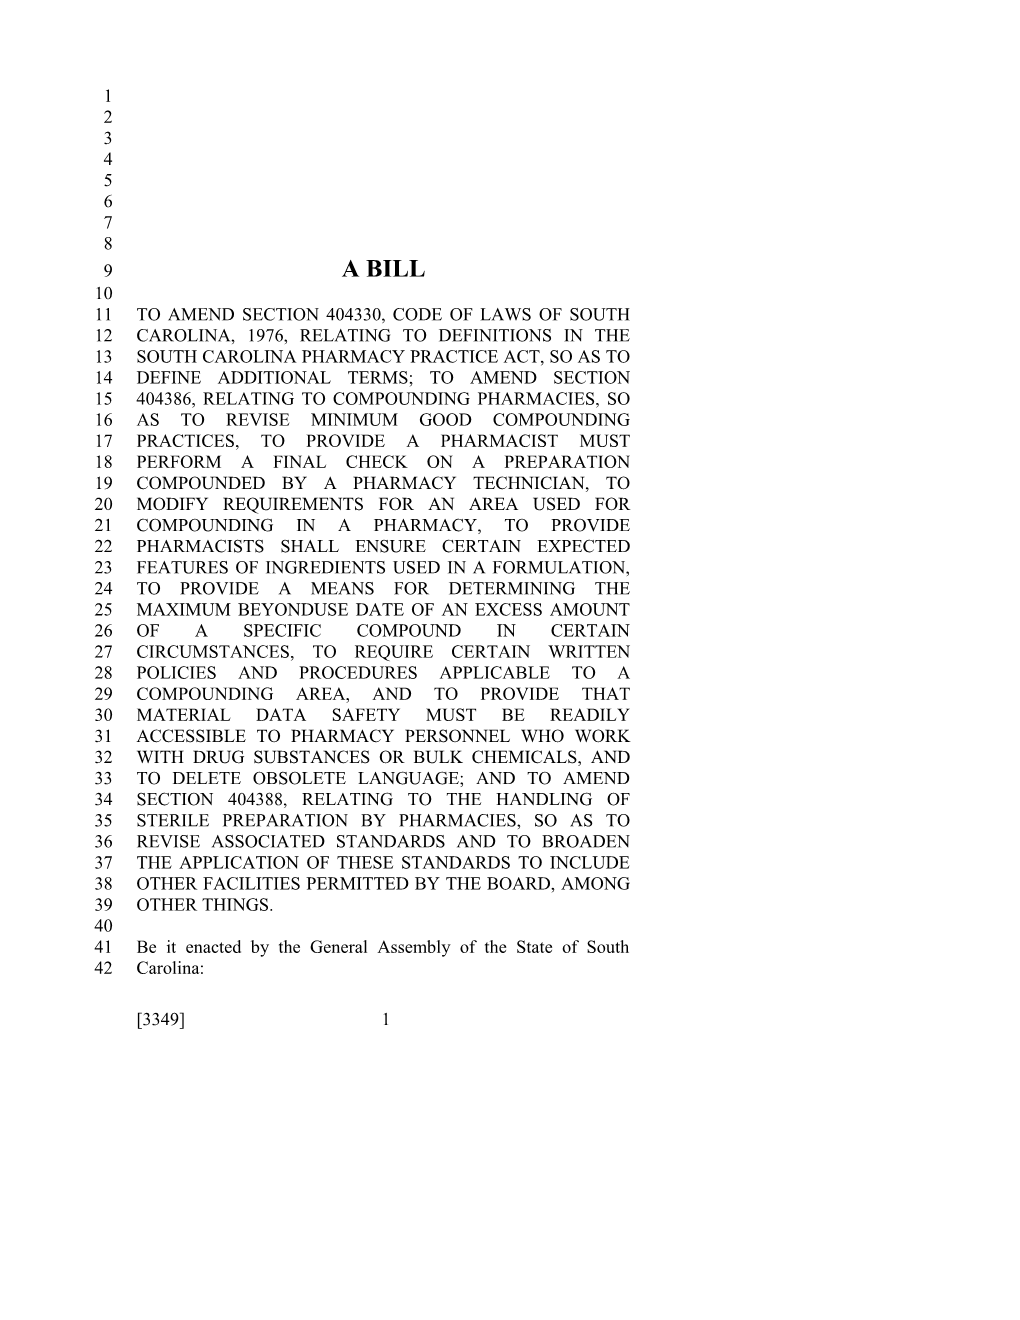 2015-2016 Bill 3349 Text of Previous Version (Jan. 20, 2015) - South Carolina Legislature Online